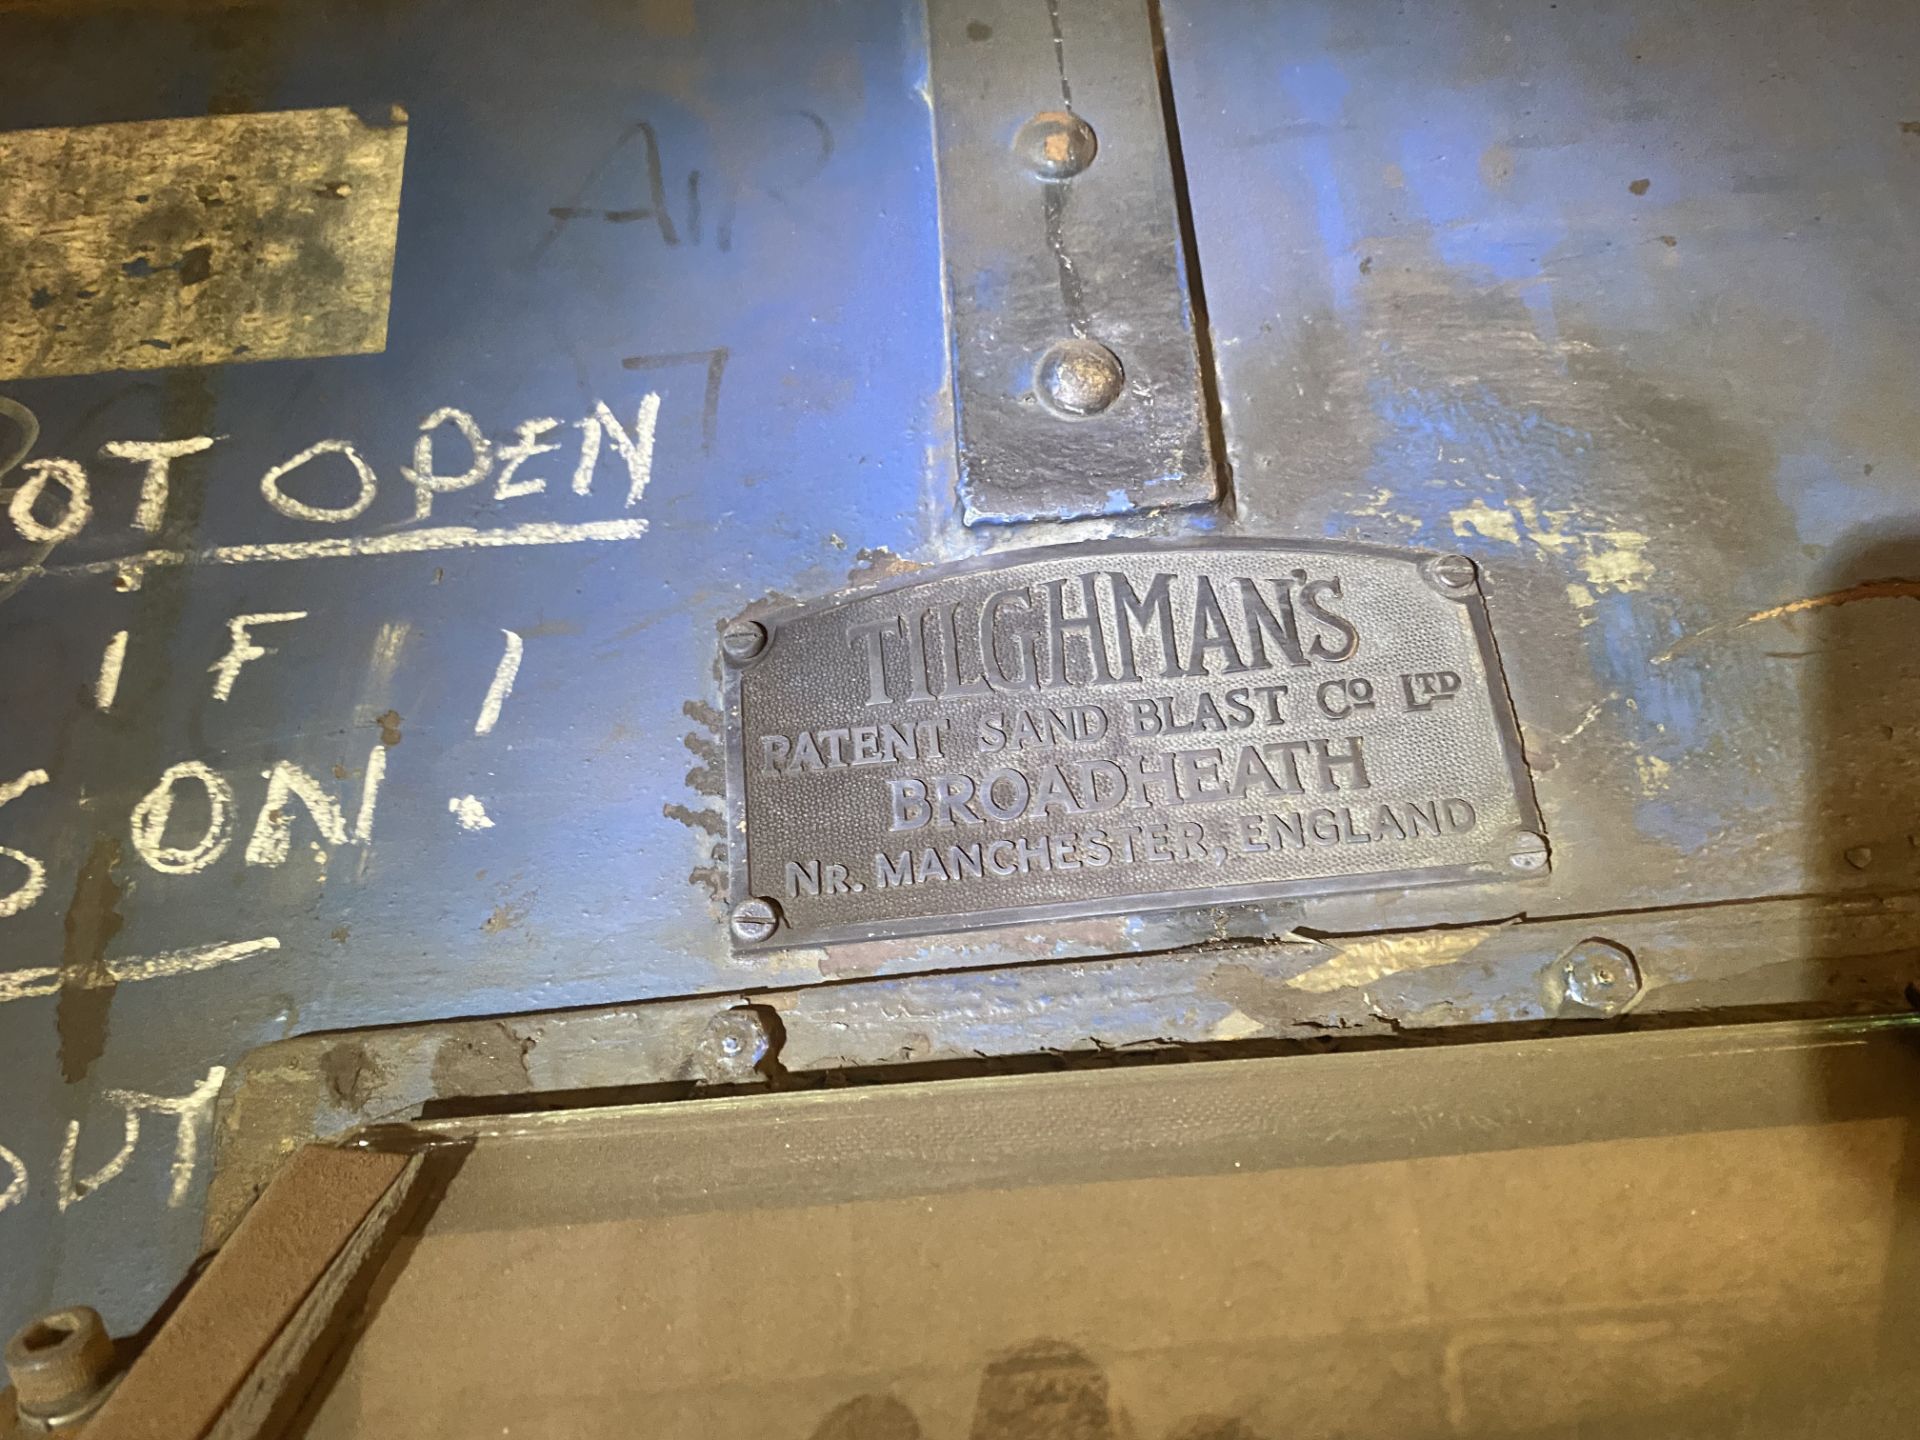 Tilghmans Shot Blast Cabinet, with discharge hopper vendors comments Internal dims are 850mm x 850mm - Image 4 of 5